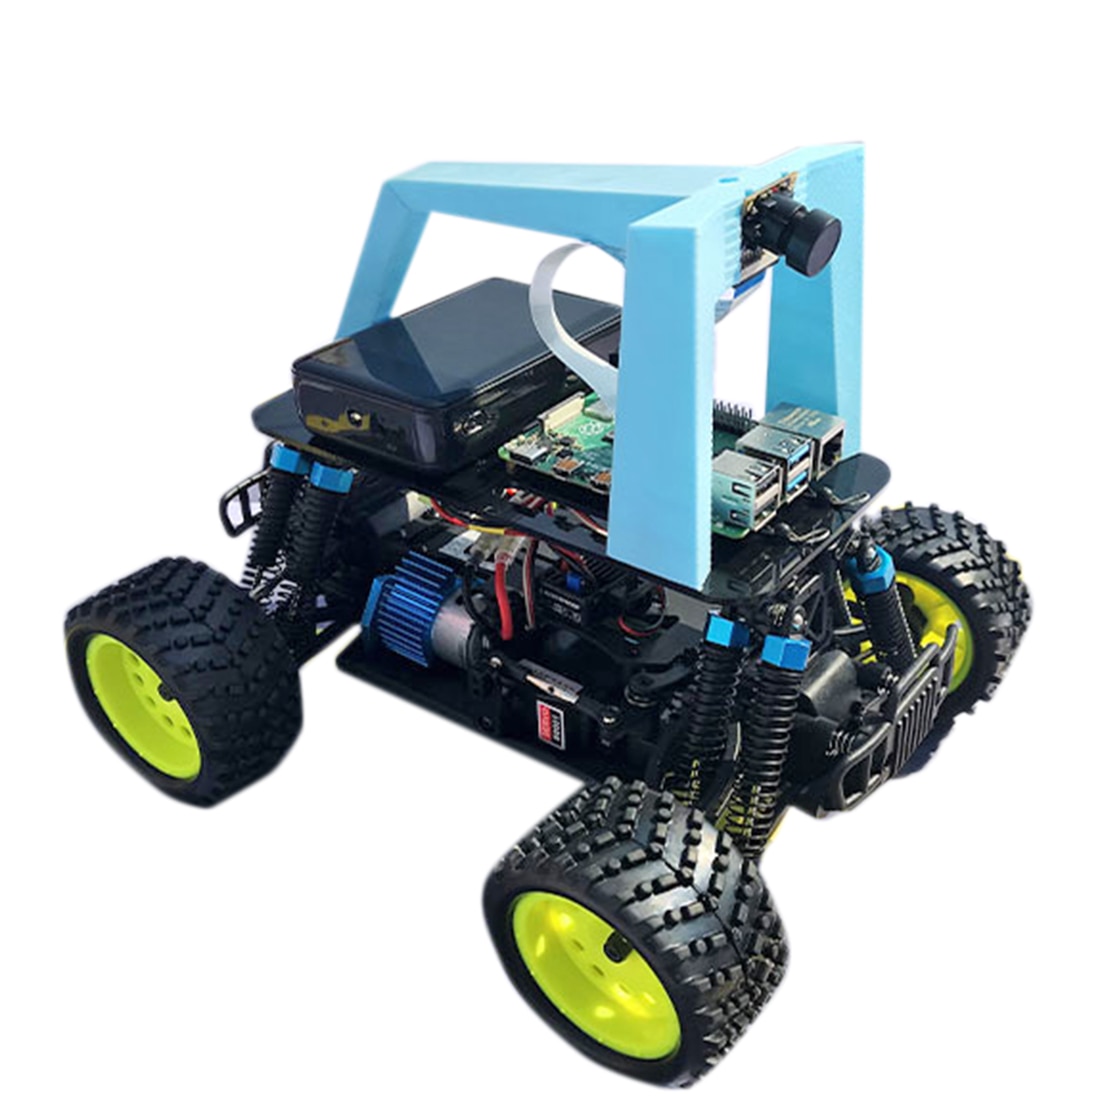 Hot Artificial Intelligence Car Programmable Autopilot Donkey Robot Car Kit With Racing Track For Jetson Nano Development Board